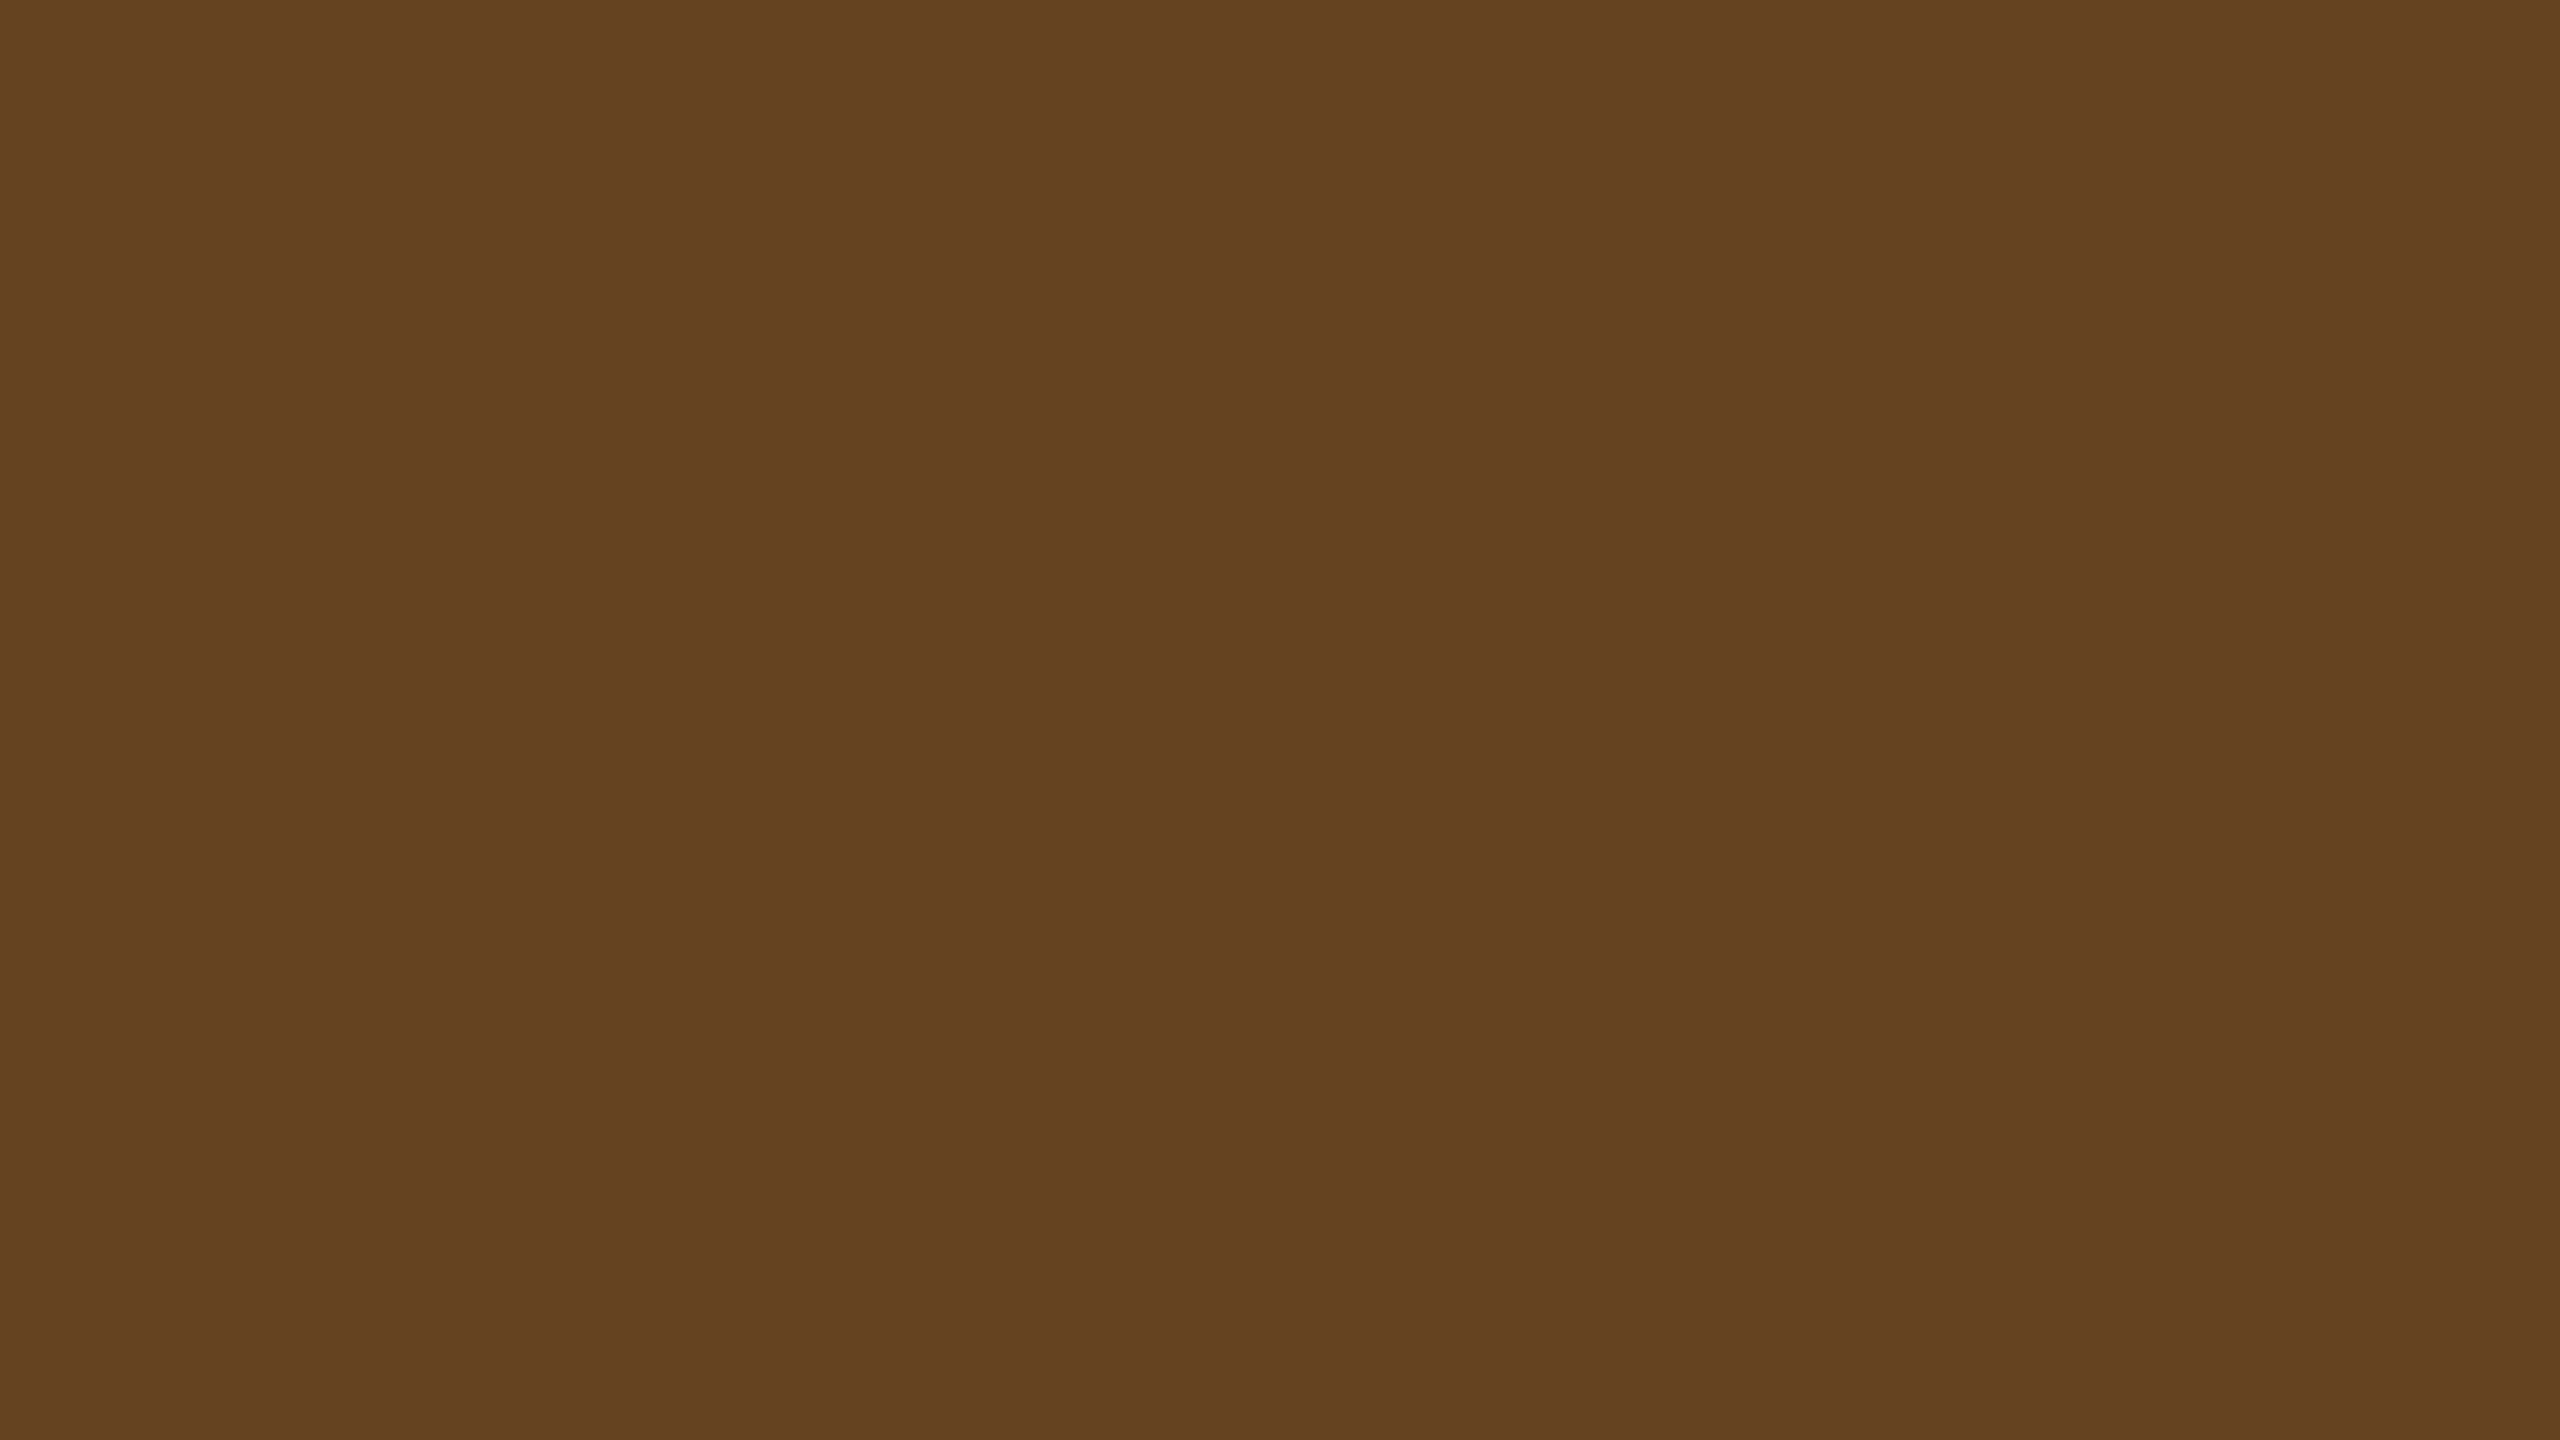 Background Color Solid Brown Otter Image